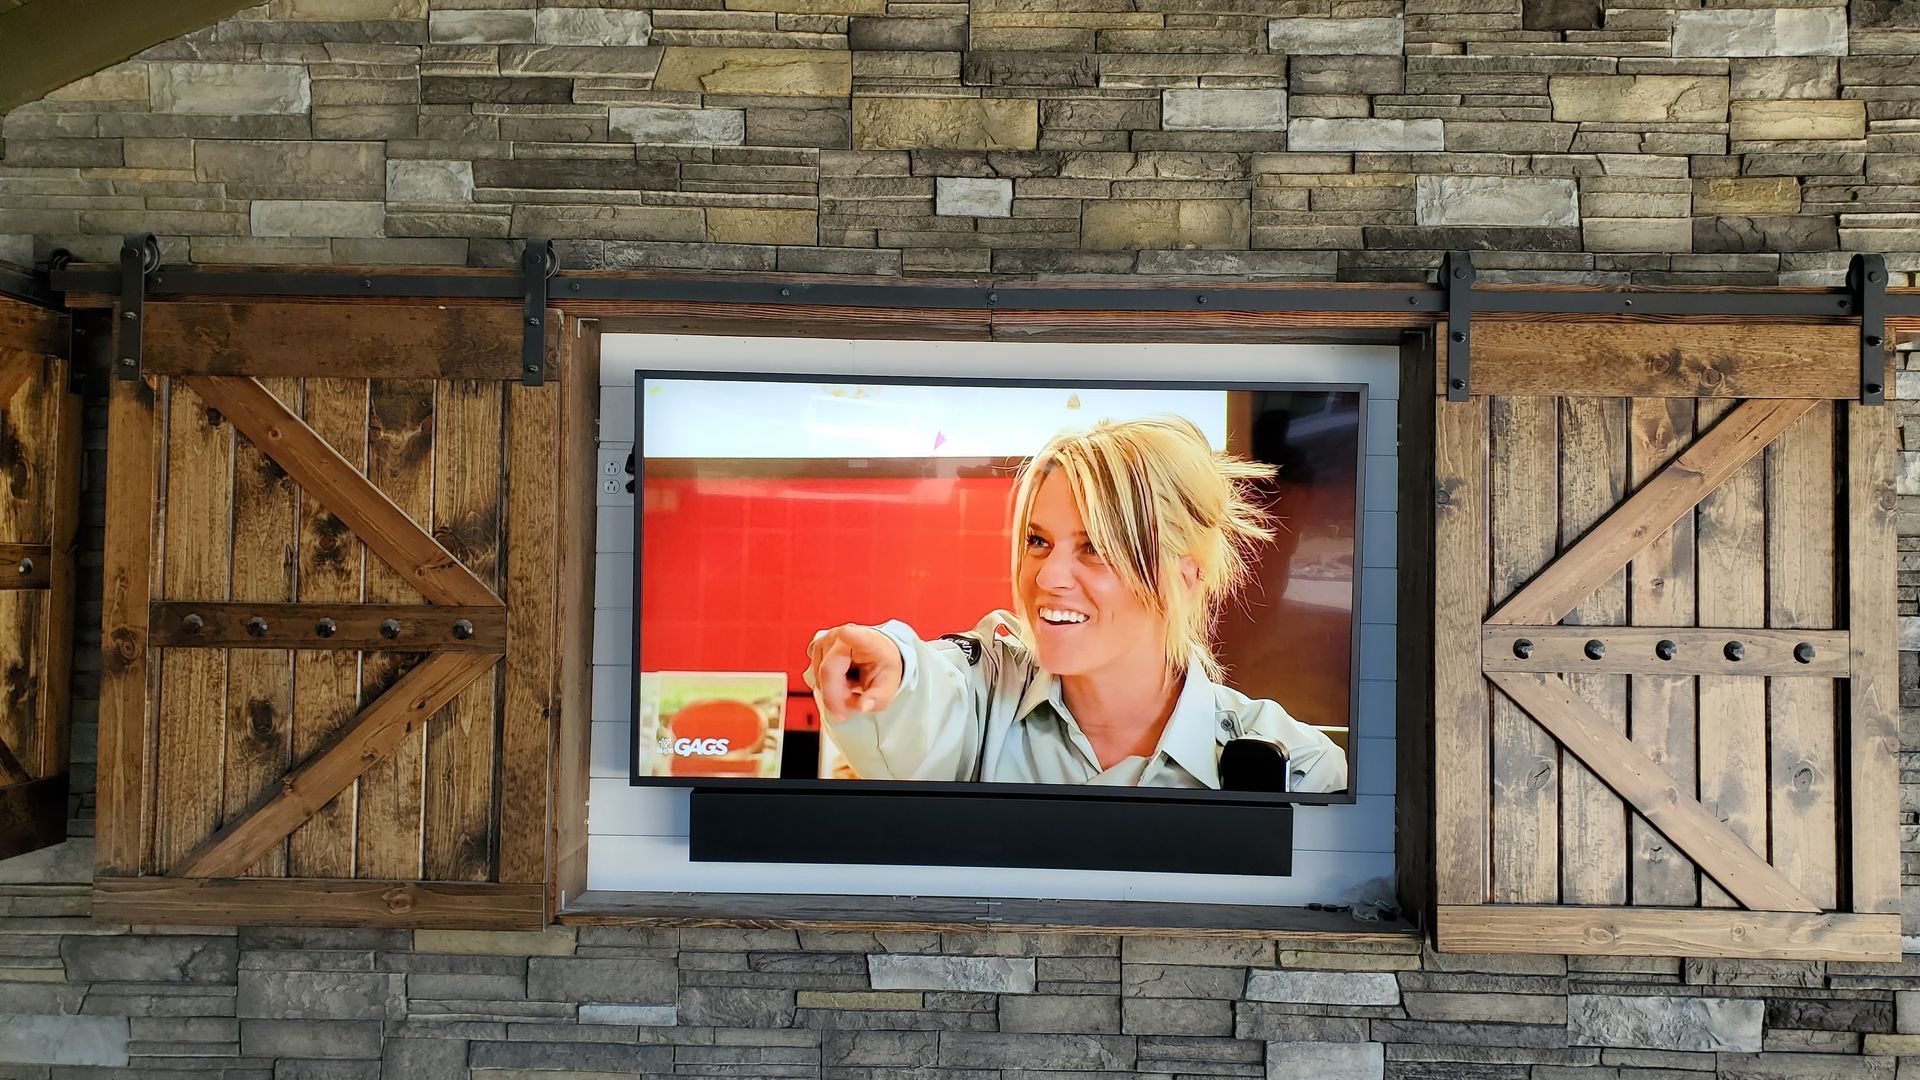 a samsung terrace outdoor tv screen shows a woman with a soundbar mounted below it. 